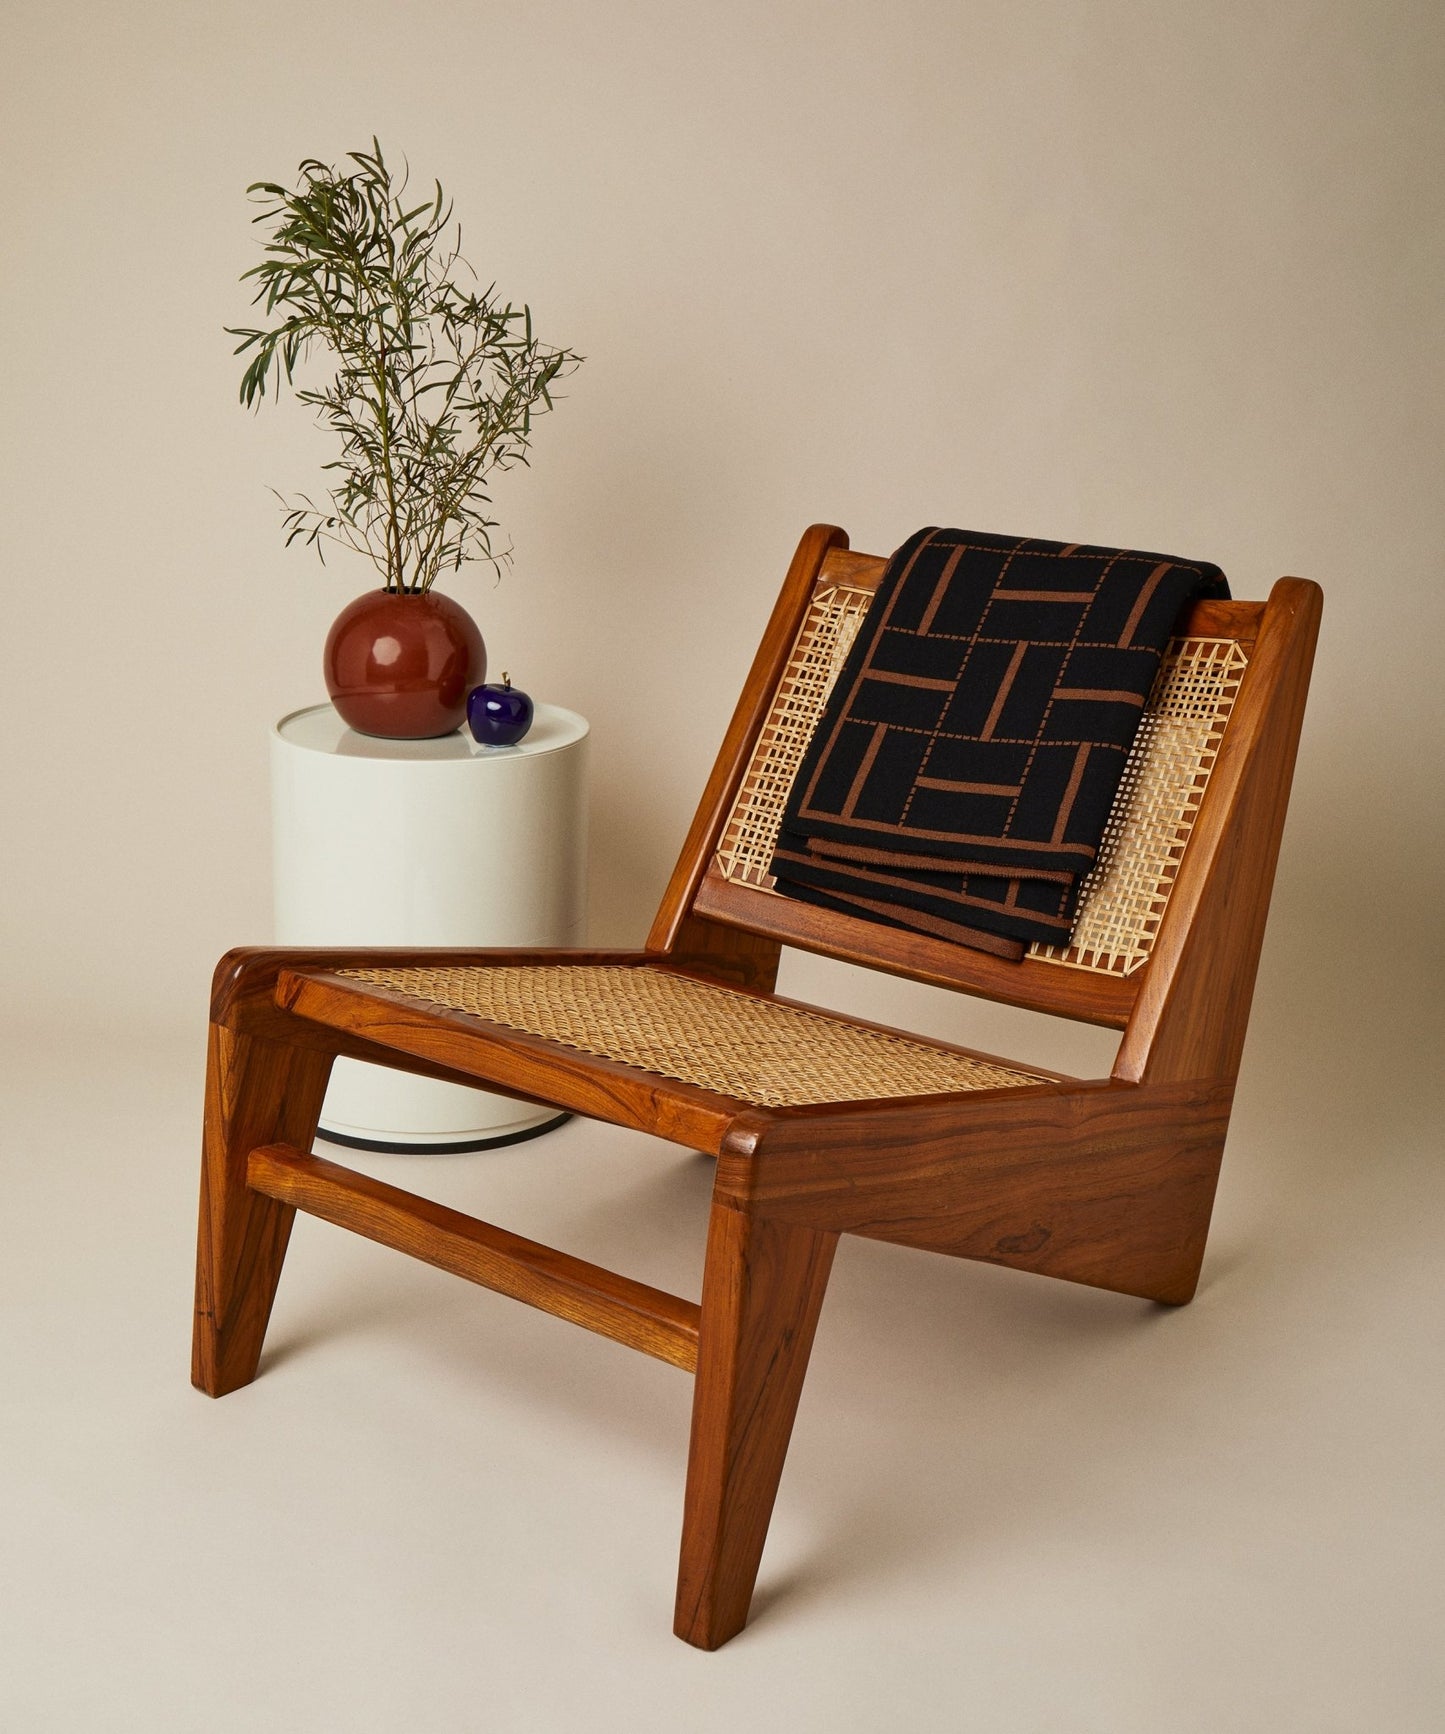 Biombo Merino Wool Blanket- Cocoa - Ambar Homeware throw  - knitted throw - Front  chair